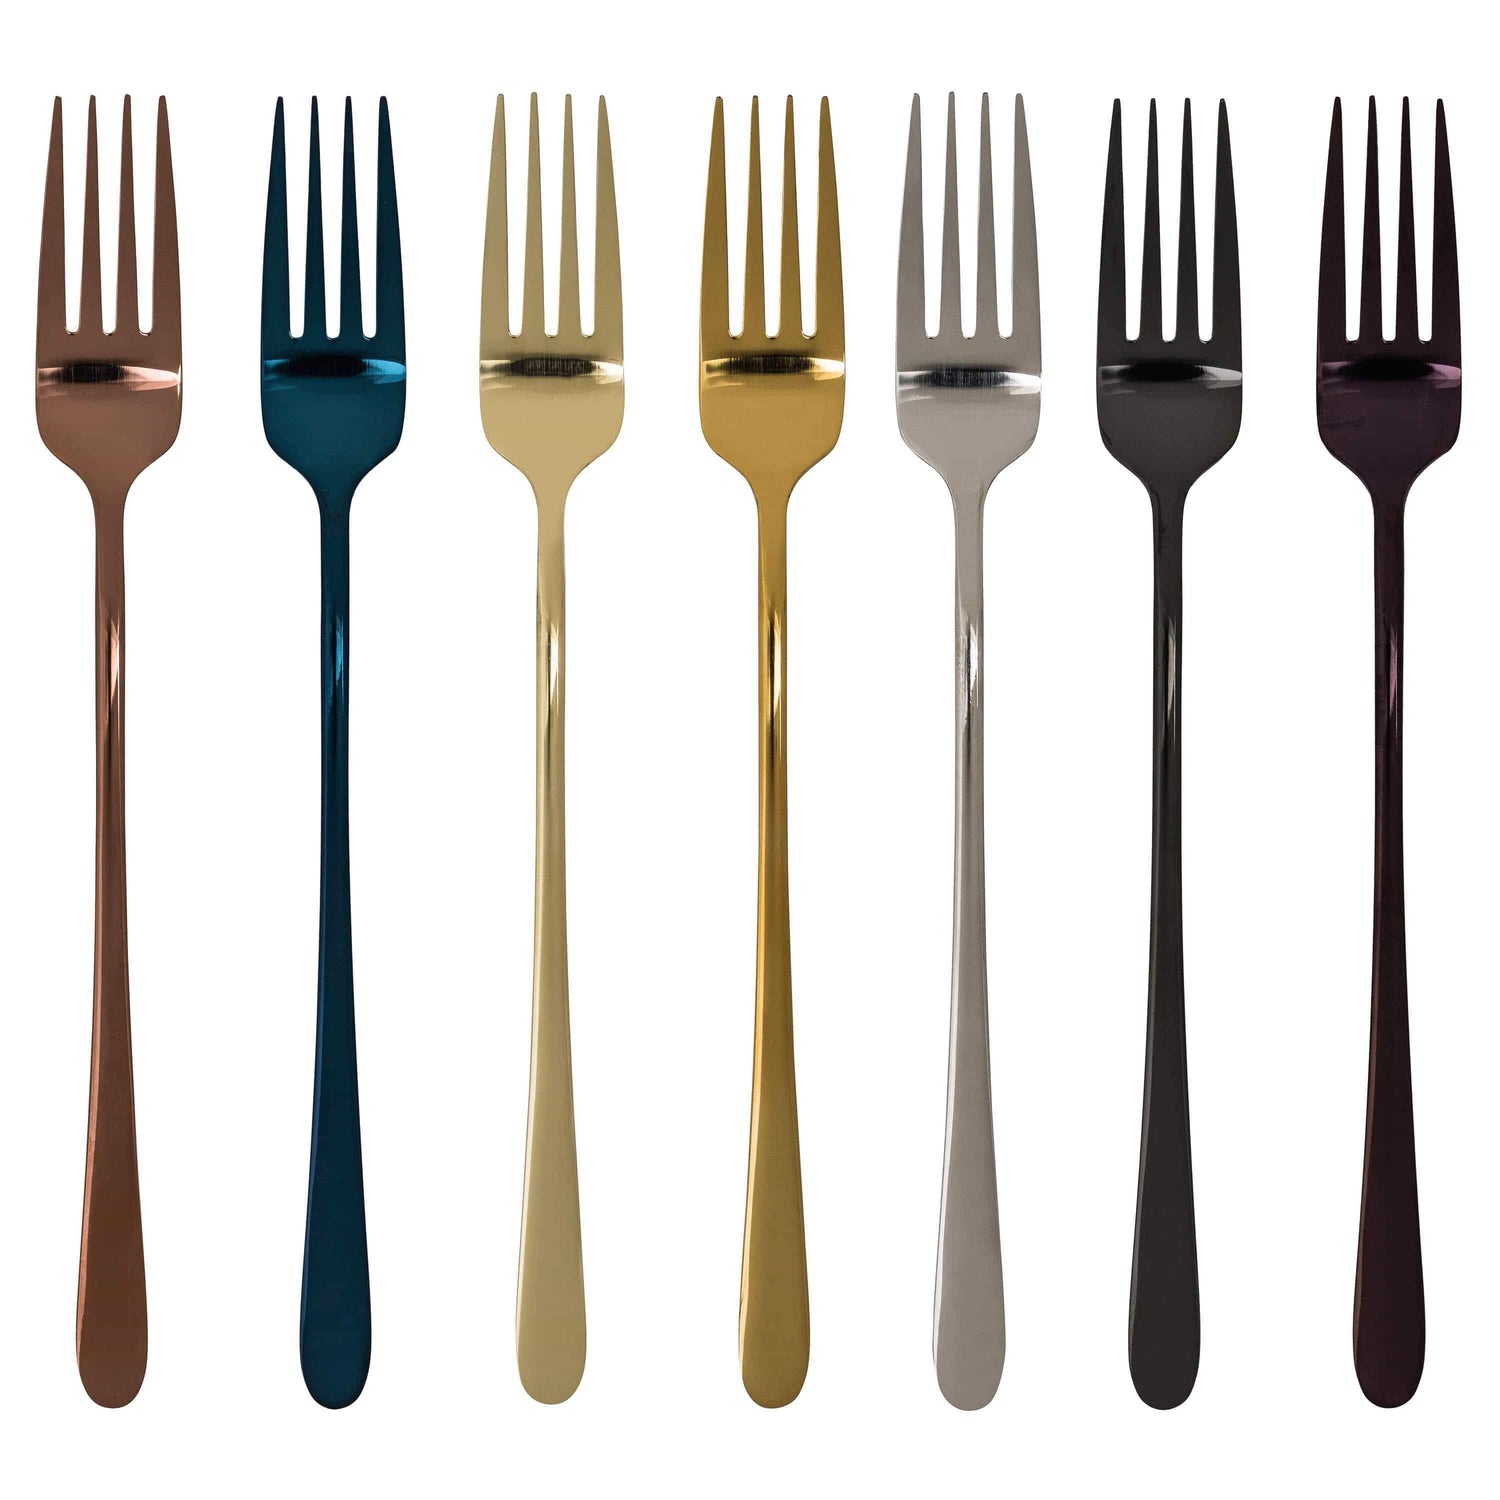 London Fork - Nordic Side - __tab1:handle-care, best-selling, bis-hidden, dining, utensils